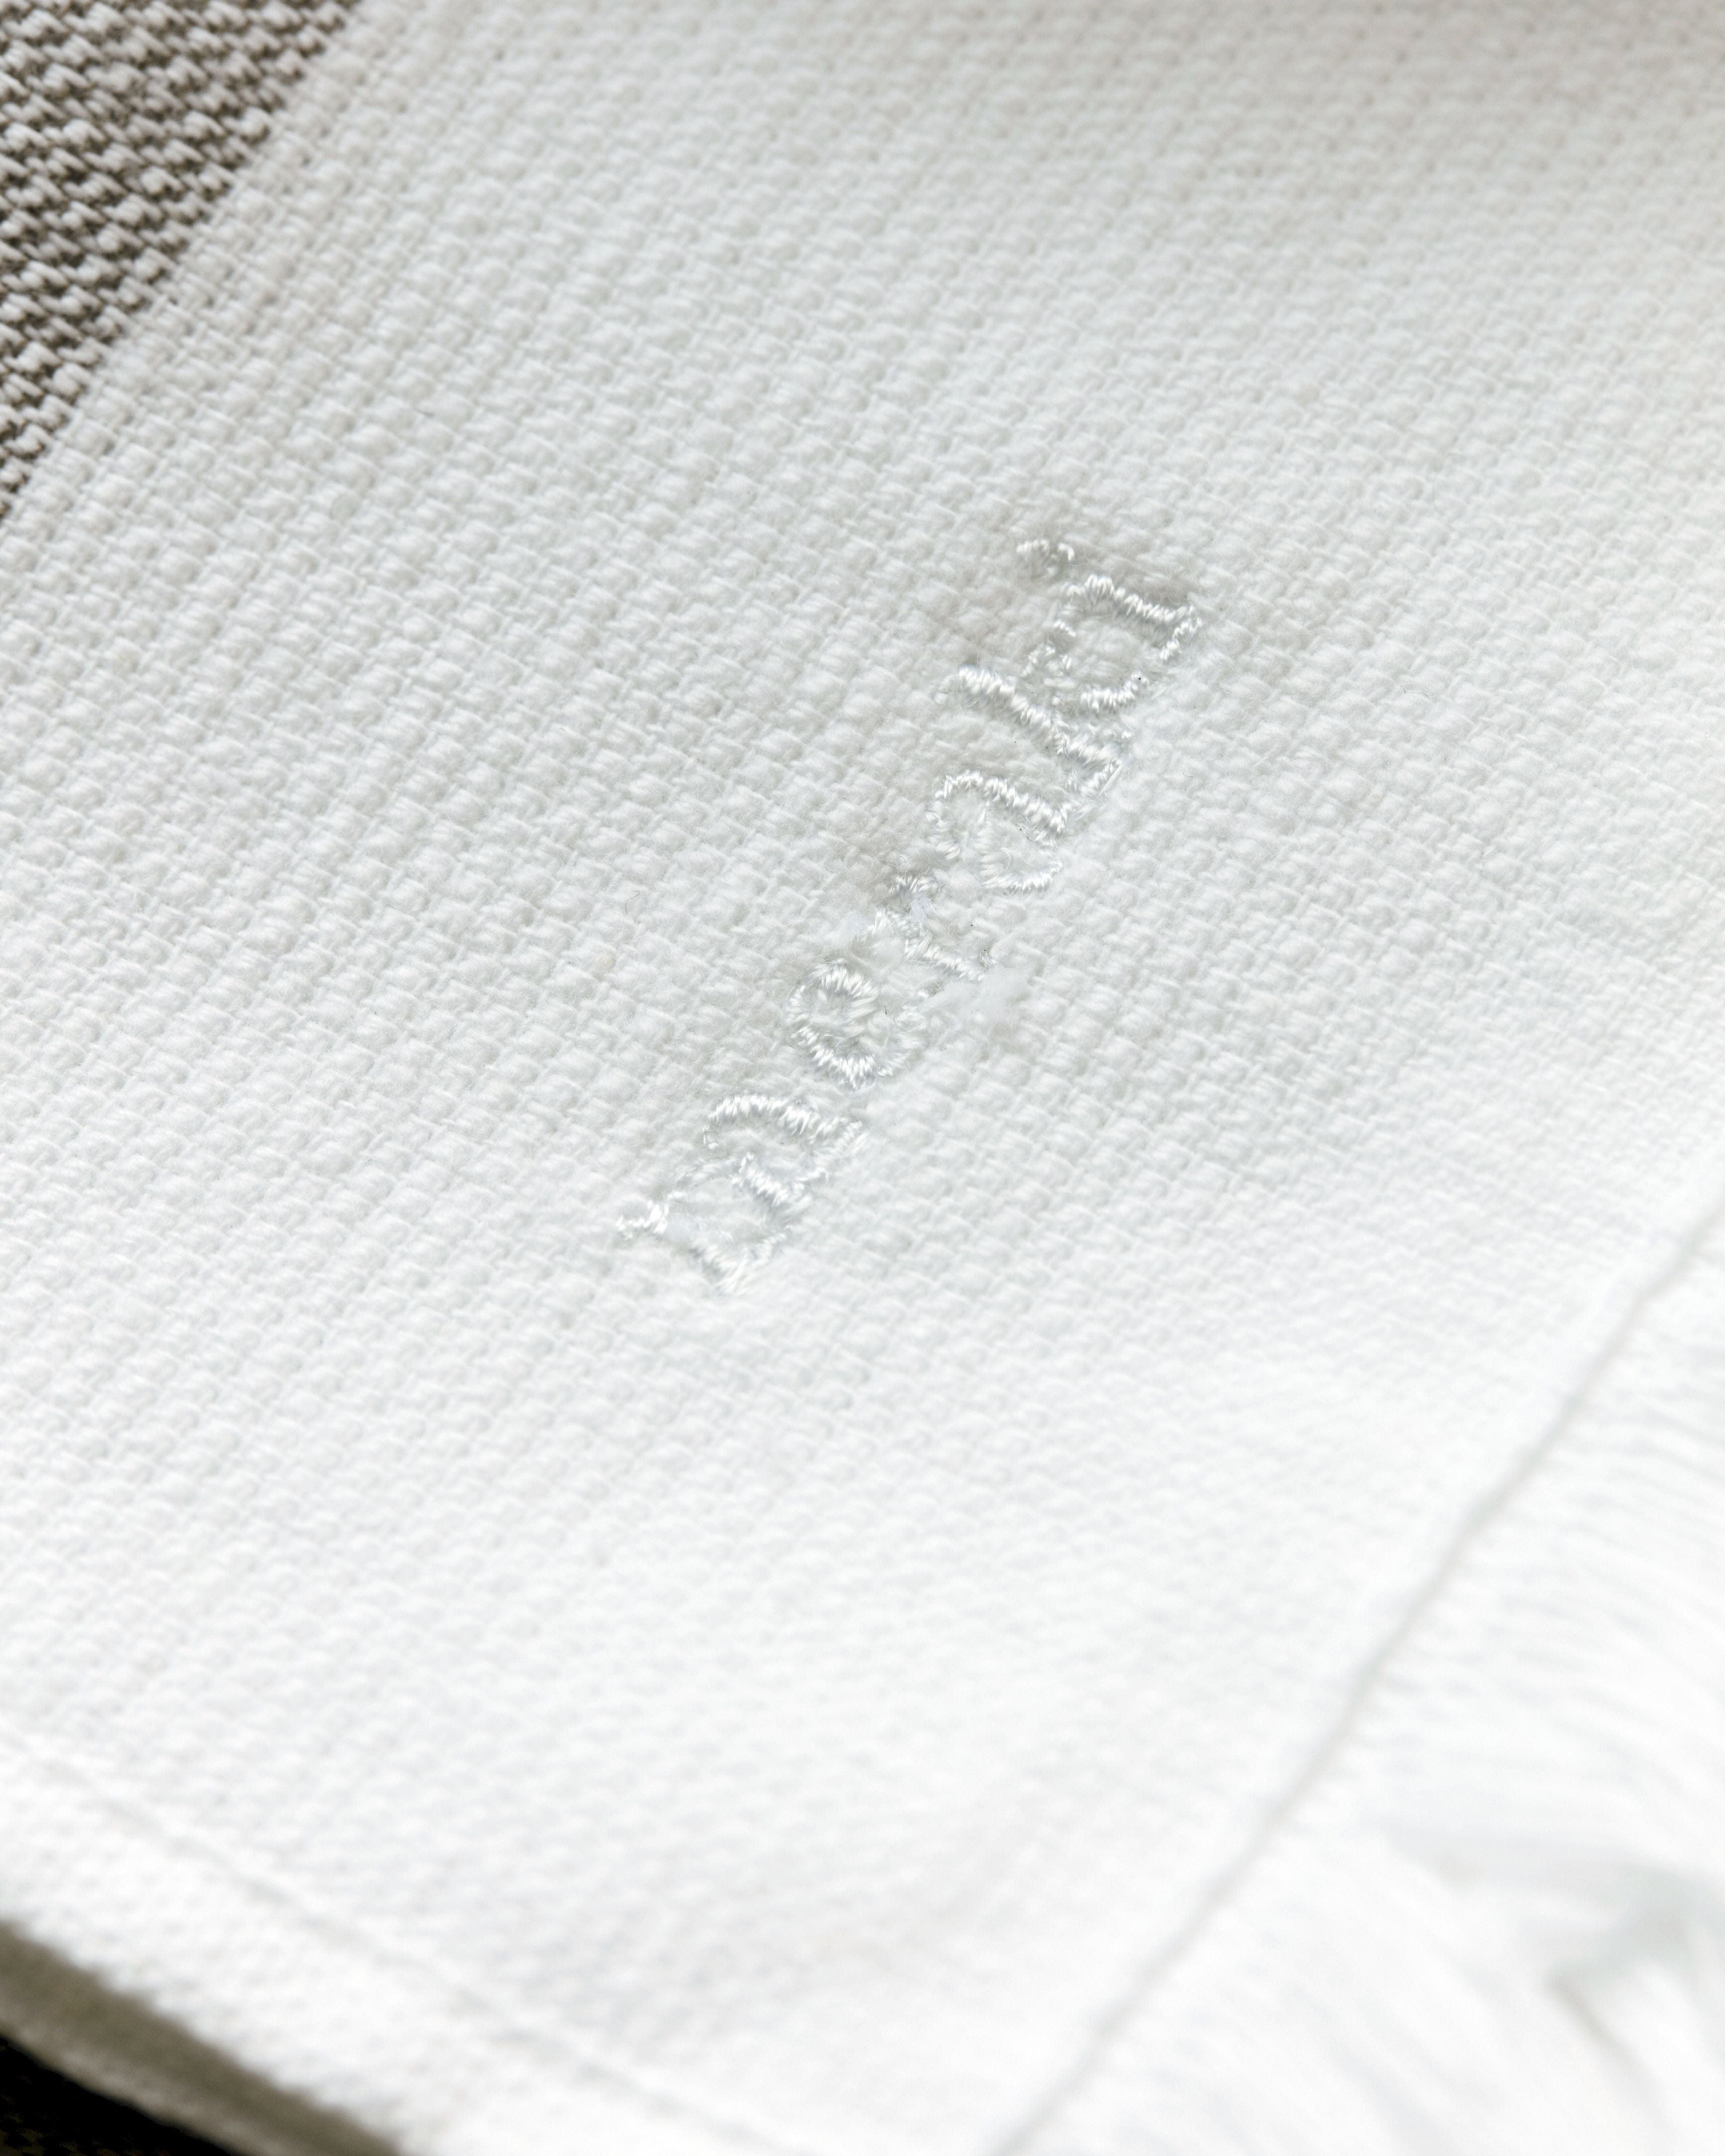 Meraki Barbarum Towel Set Of 20x100 Cm, White And Brown Stripes